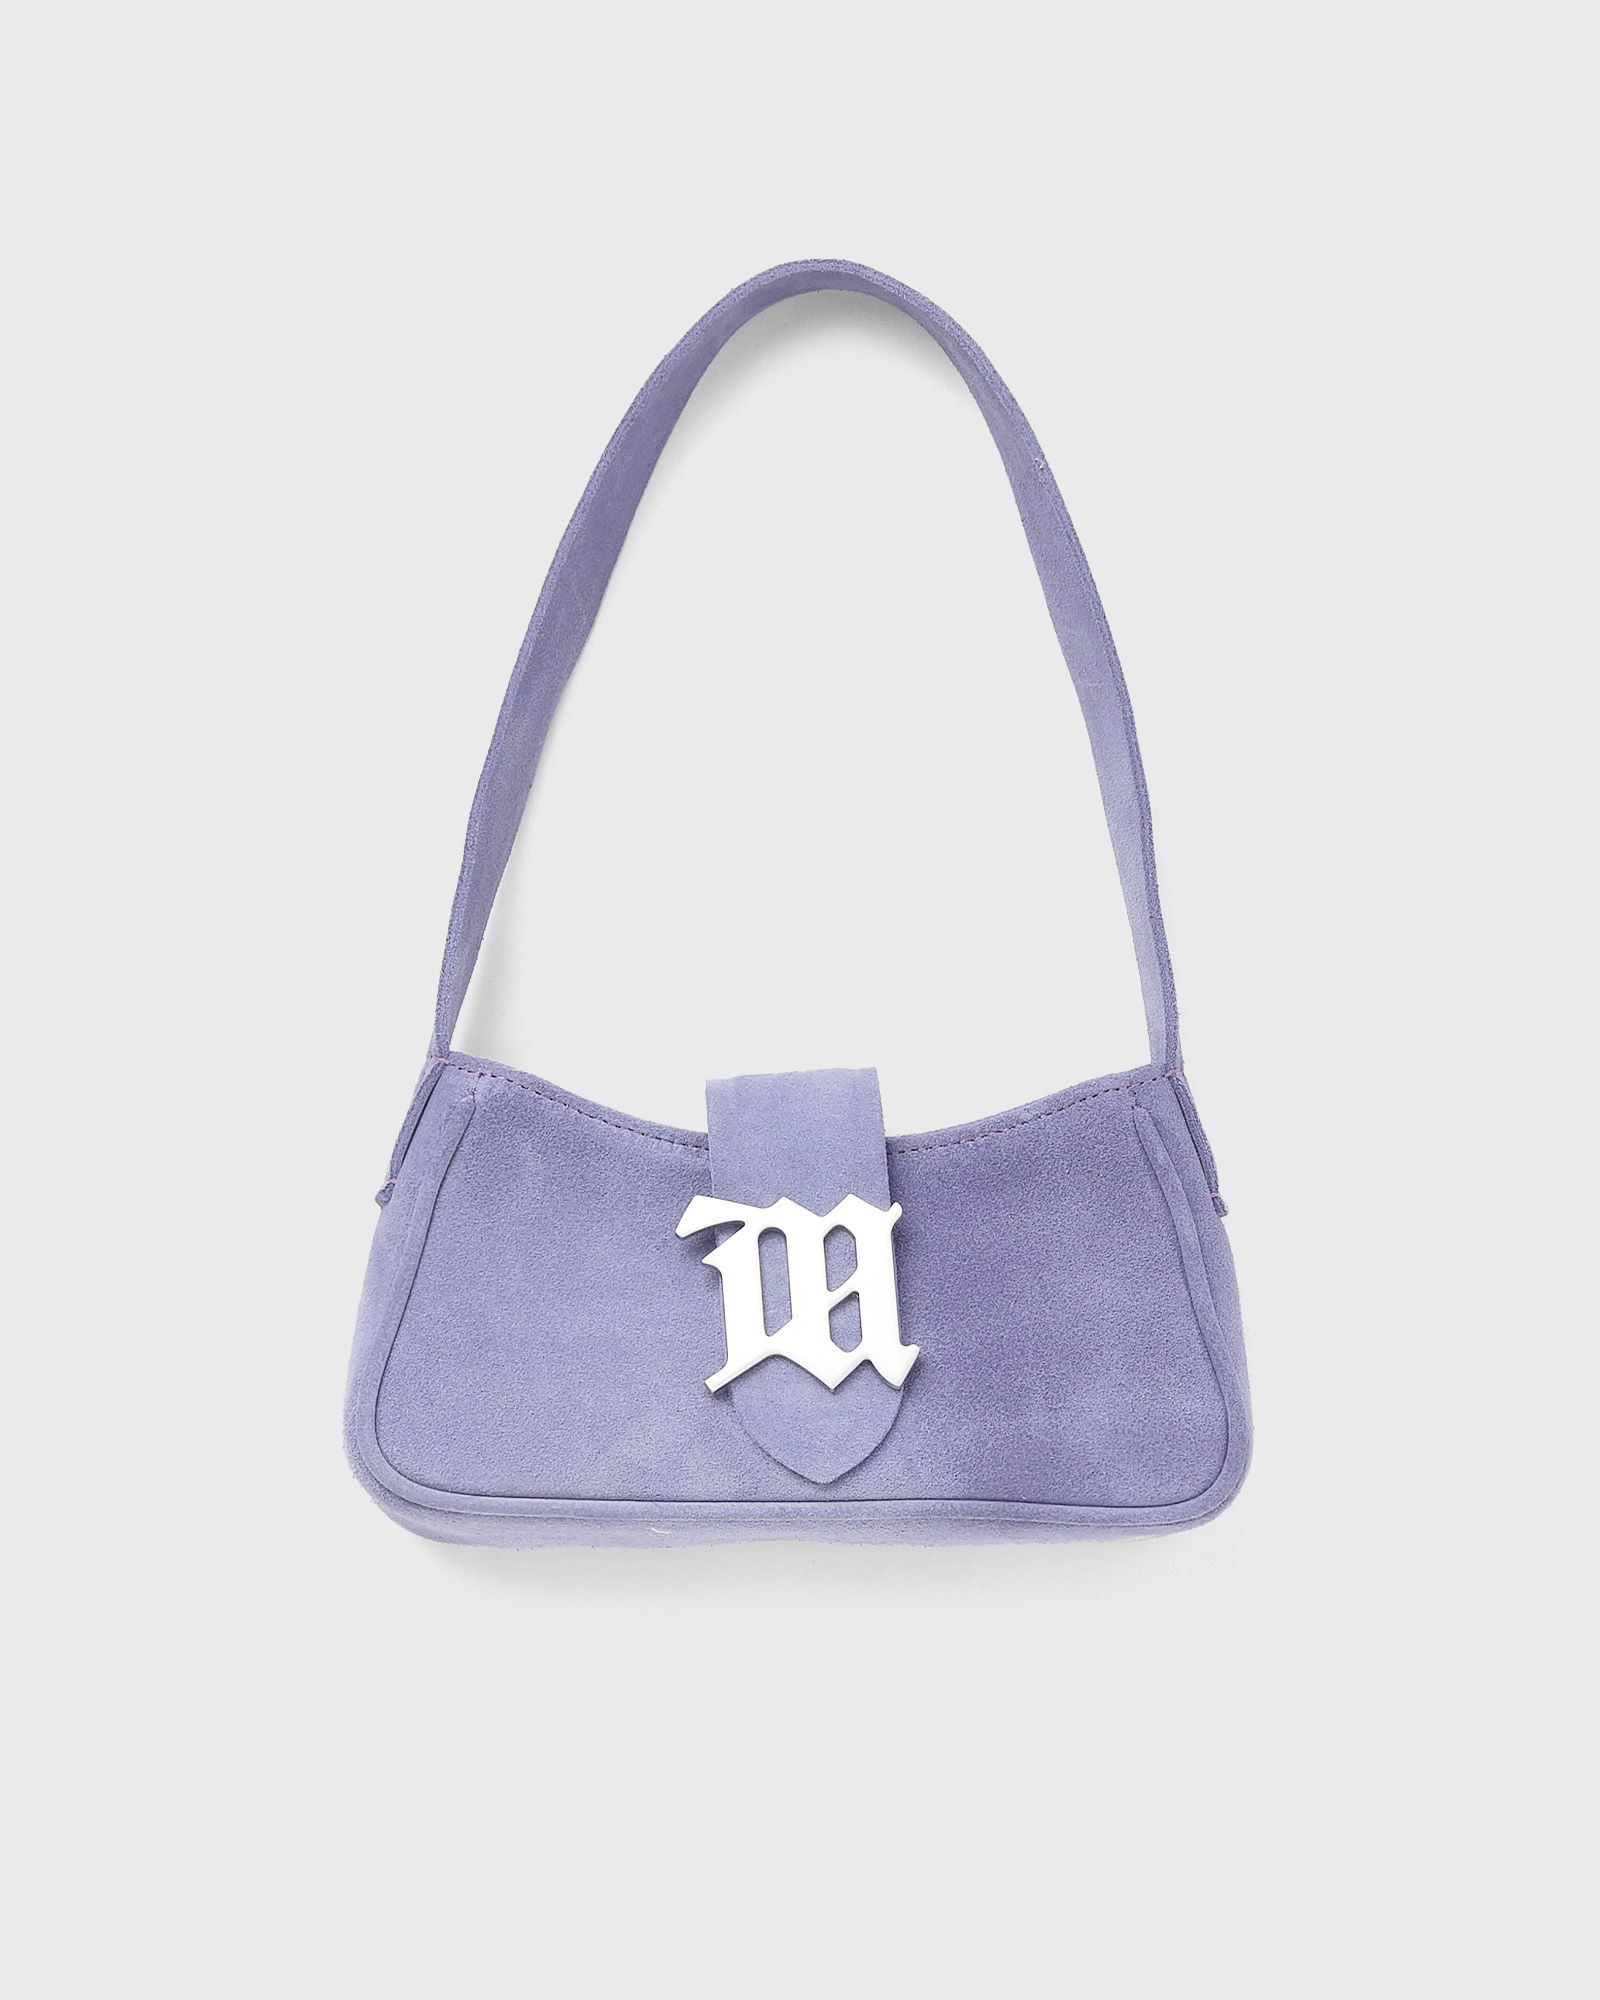 MISBHV - suede shoulder bag mini women handbags purple in größe:one size